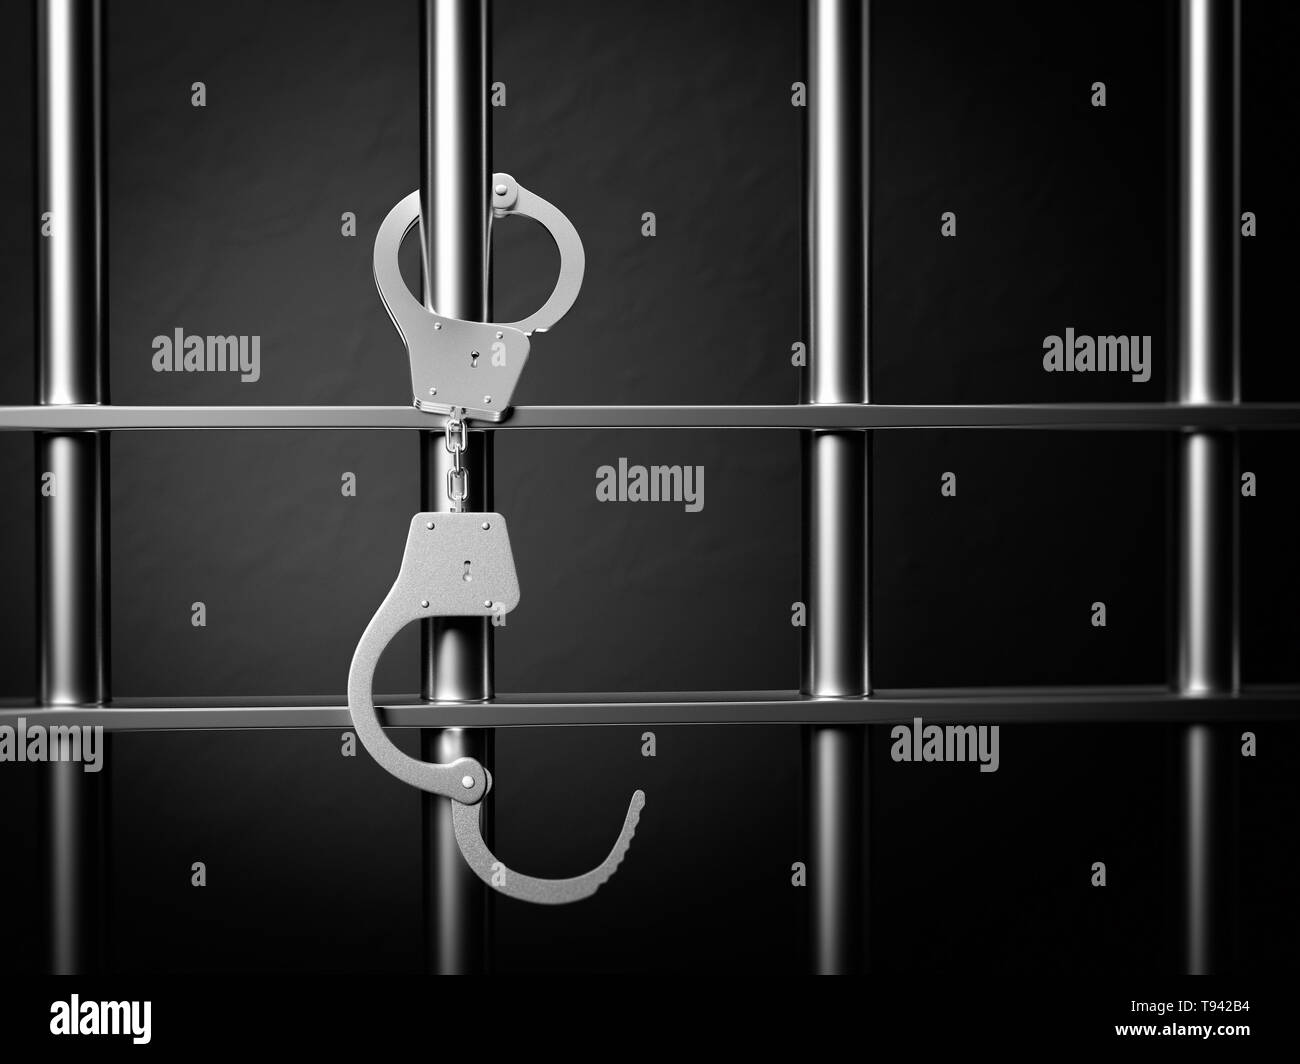 Handcuffs hanging on prison metal bars. Prison break background. 3d rendering illustration. Stock Photo